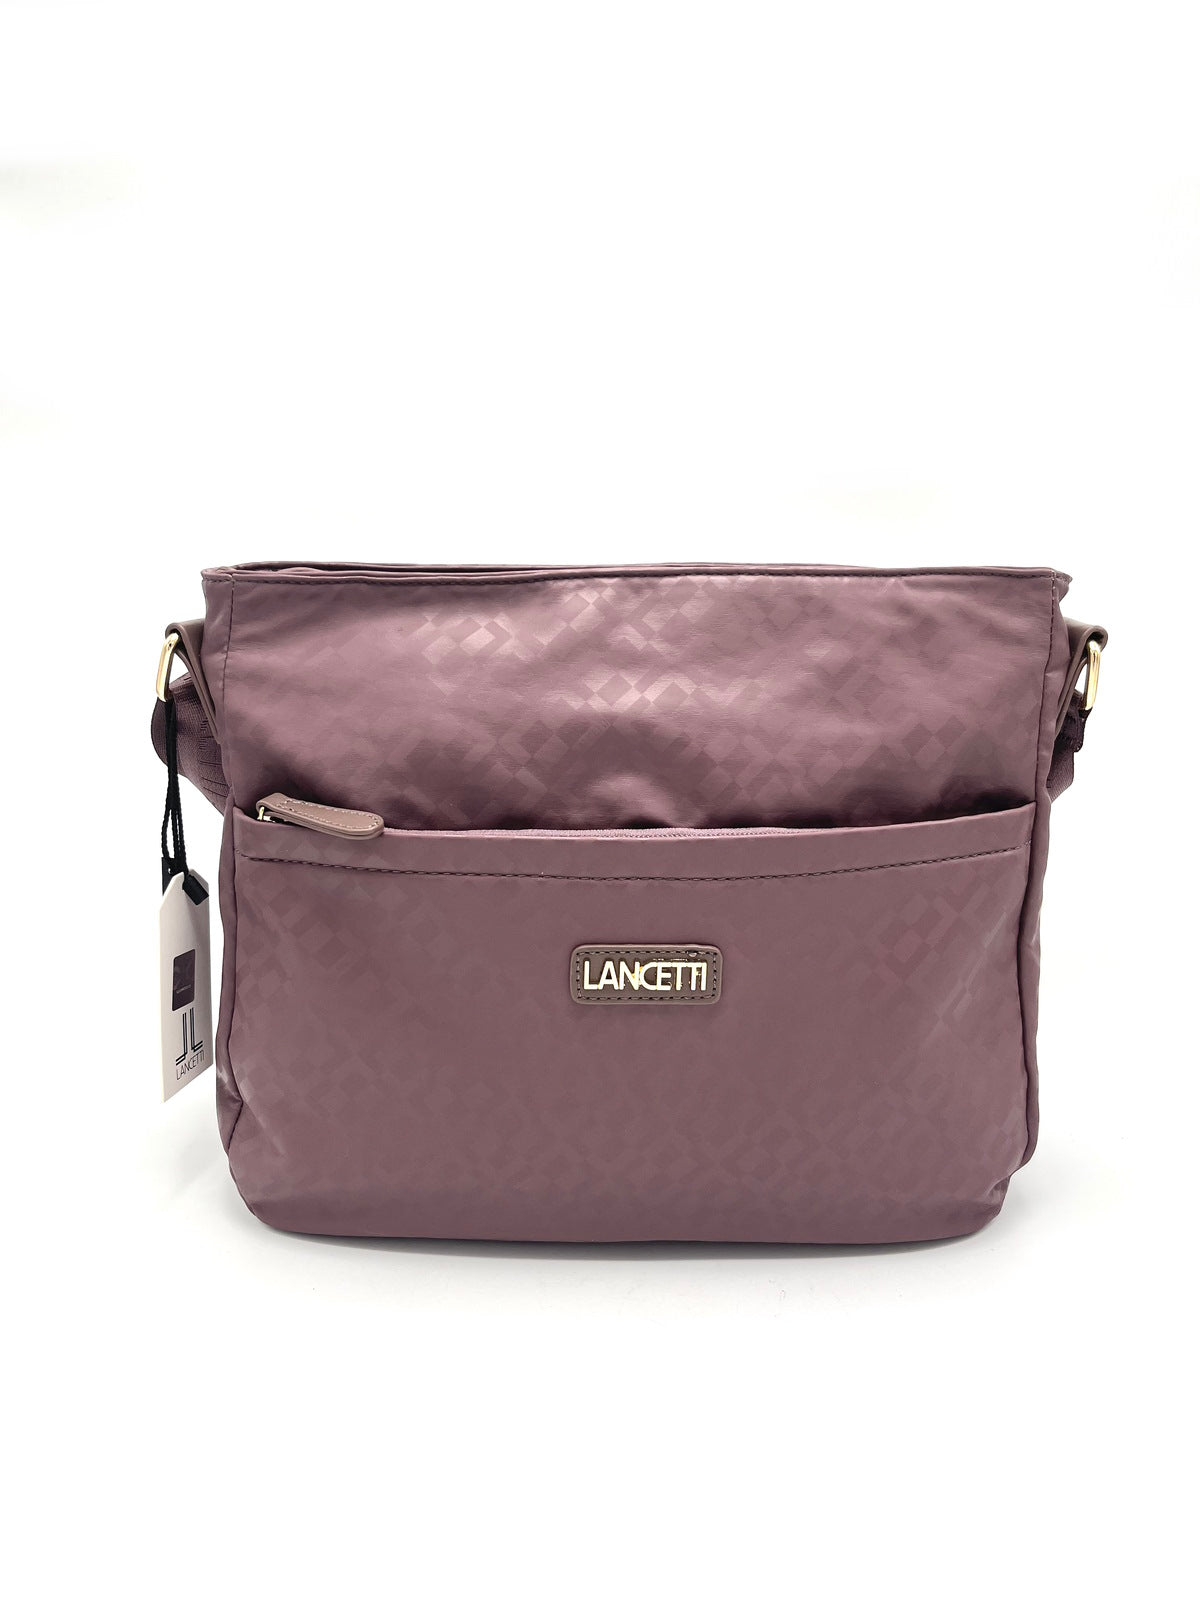 Shoulder bag, brand Lancetti, art. LL100-2.290